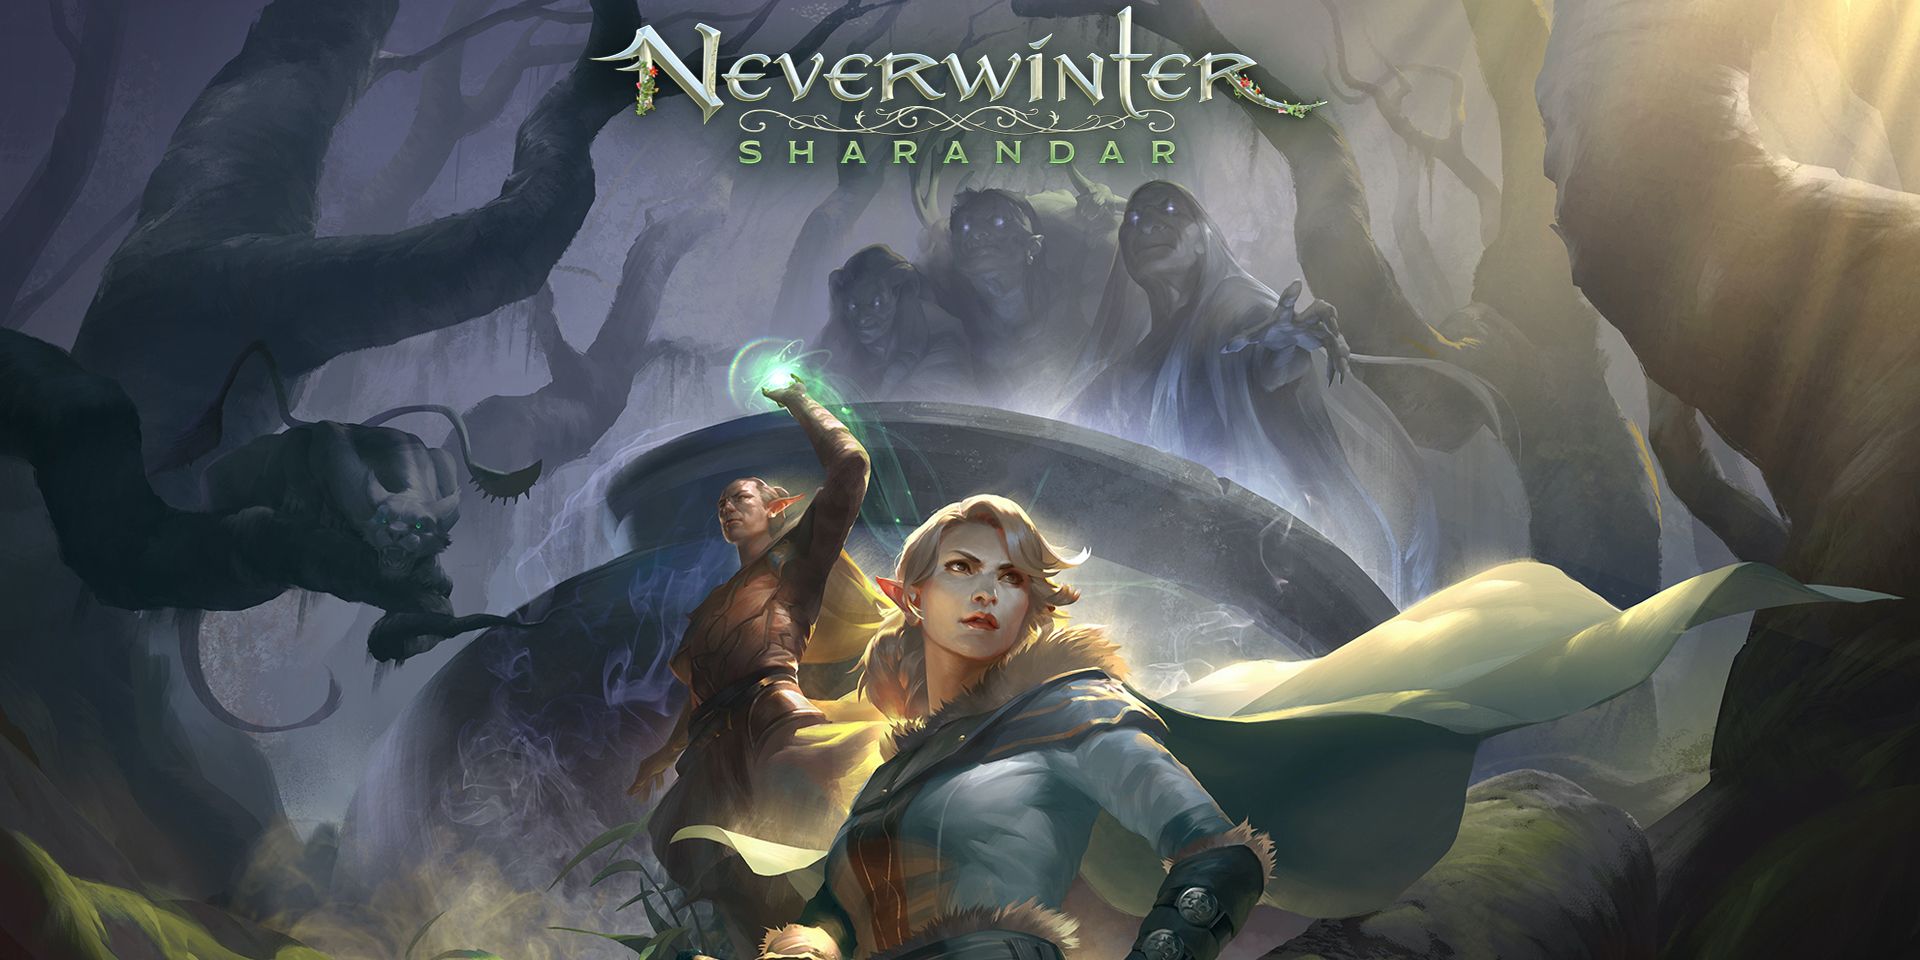 Art for the Neverwinter Sharandar expansion, featuring two elven adventurers wandering through a dangerous forest